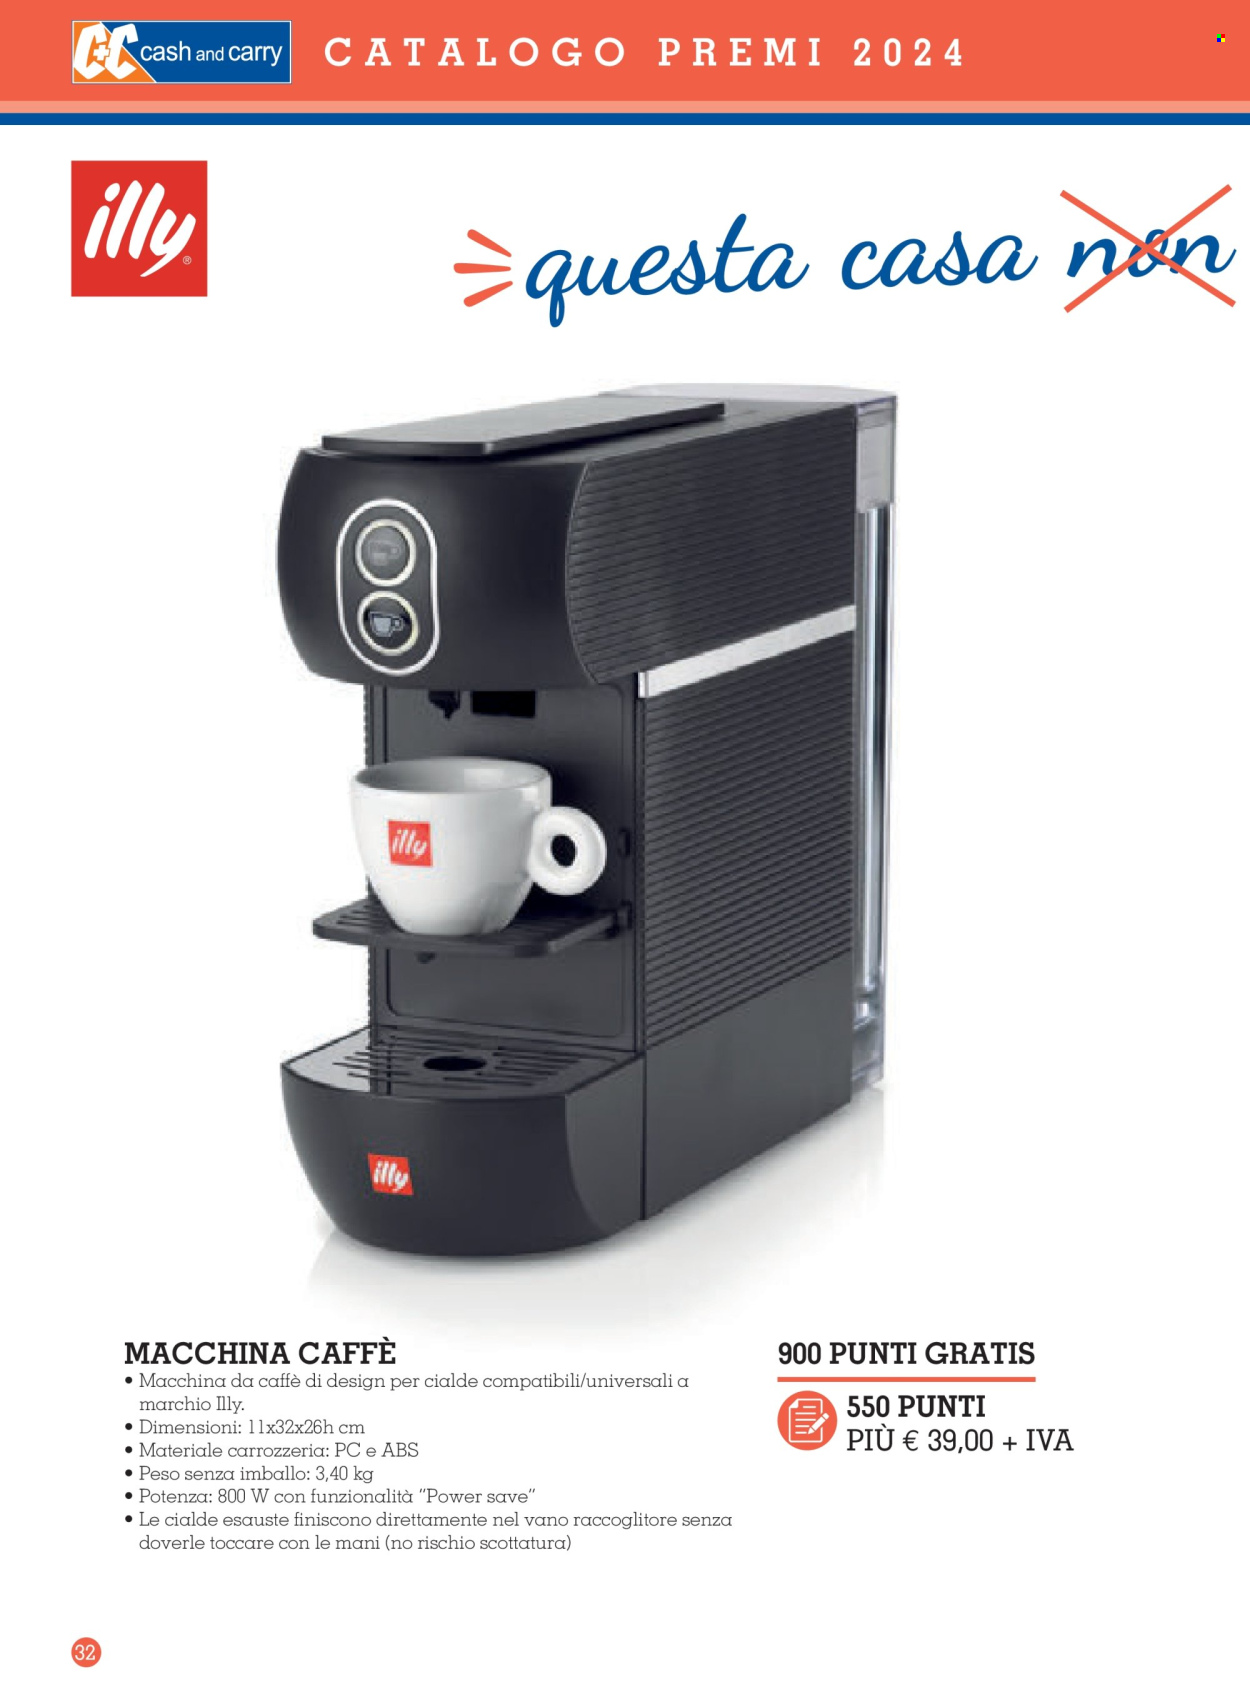 thumbnail - Volantino C+C Cash & Carry - 11/3/2024 - 2/2/2025 - Prodotti in offerta - cialda, illy, macchina per caffé. Pagina 32.